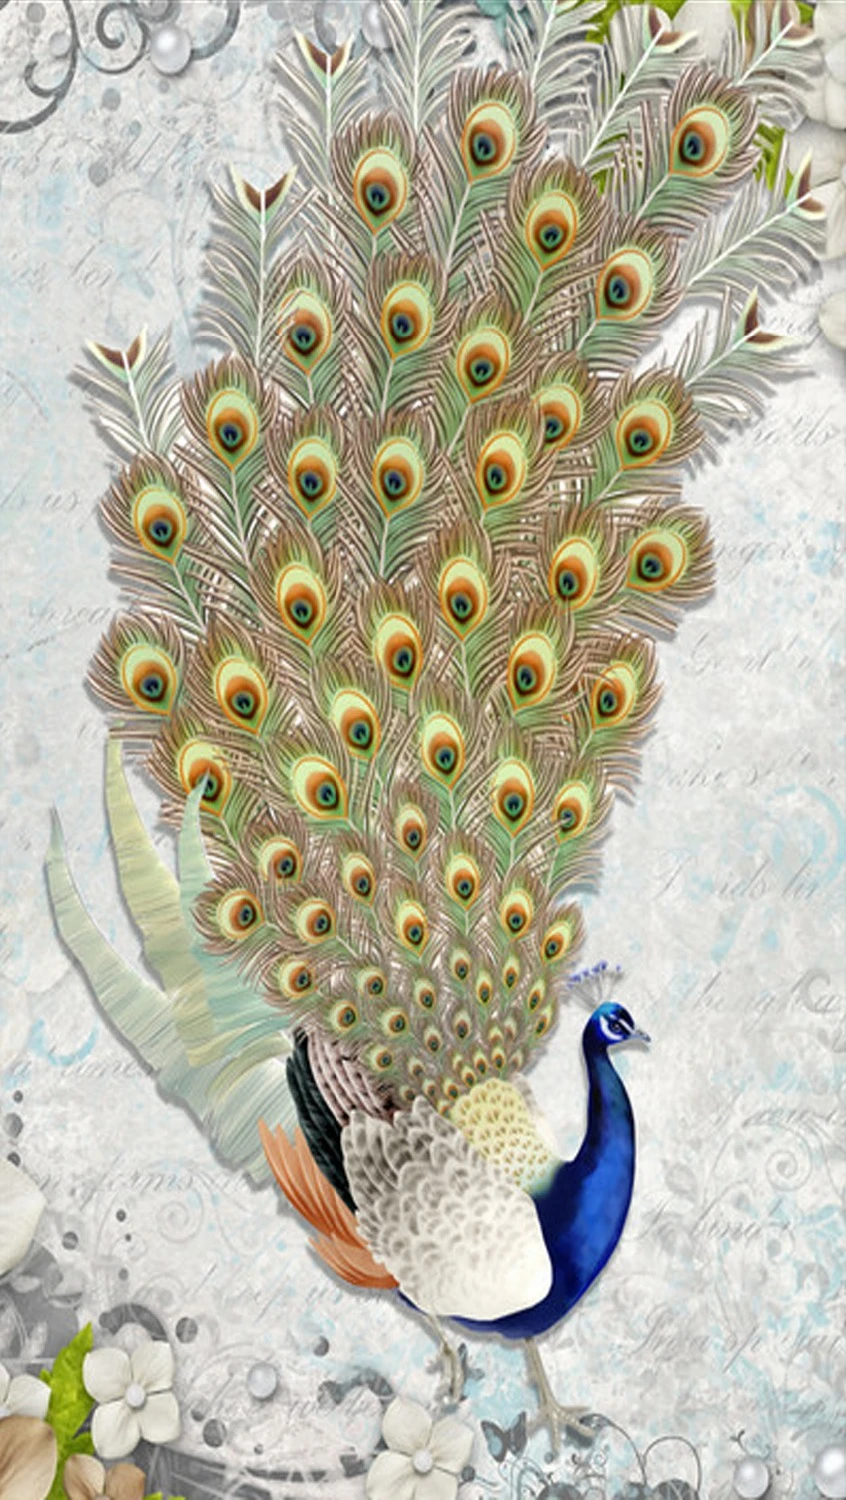 5dダイヤモンド絵画動物孔雀クロスステッチダイヤモンド画像ラインストーン刺繍孔雀ダイヤモンド絵画孔雀描画 Diamond Painting Peacock Painting Peacock5d Diamond Aliexpress